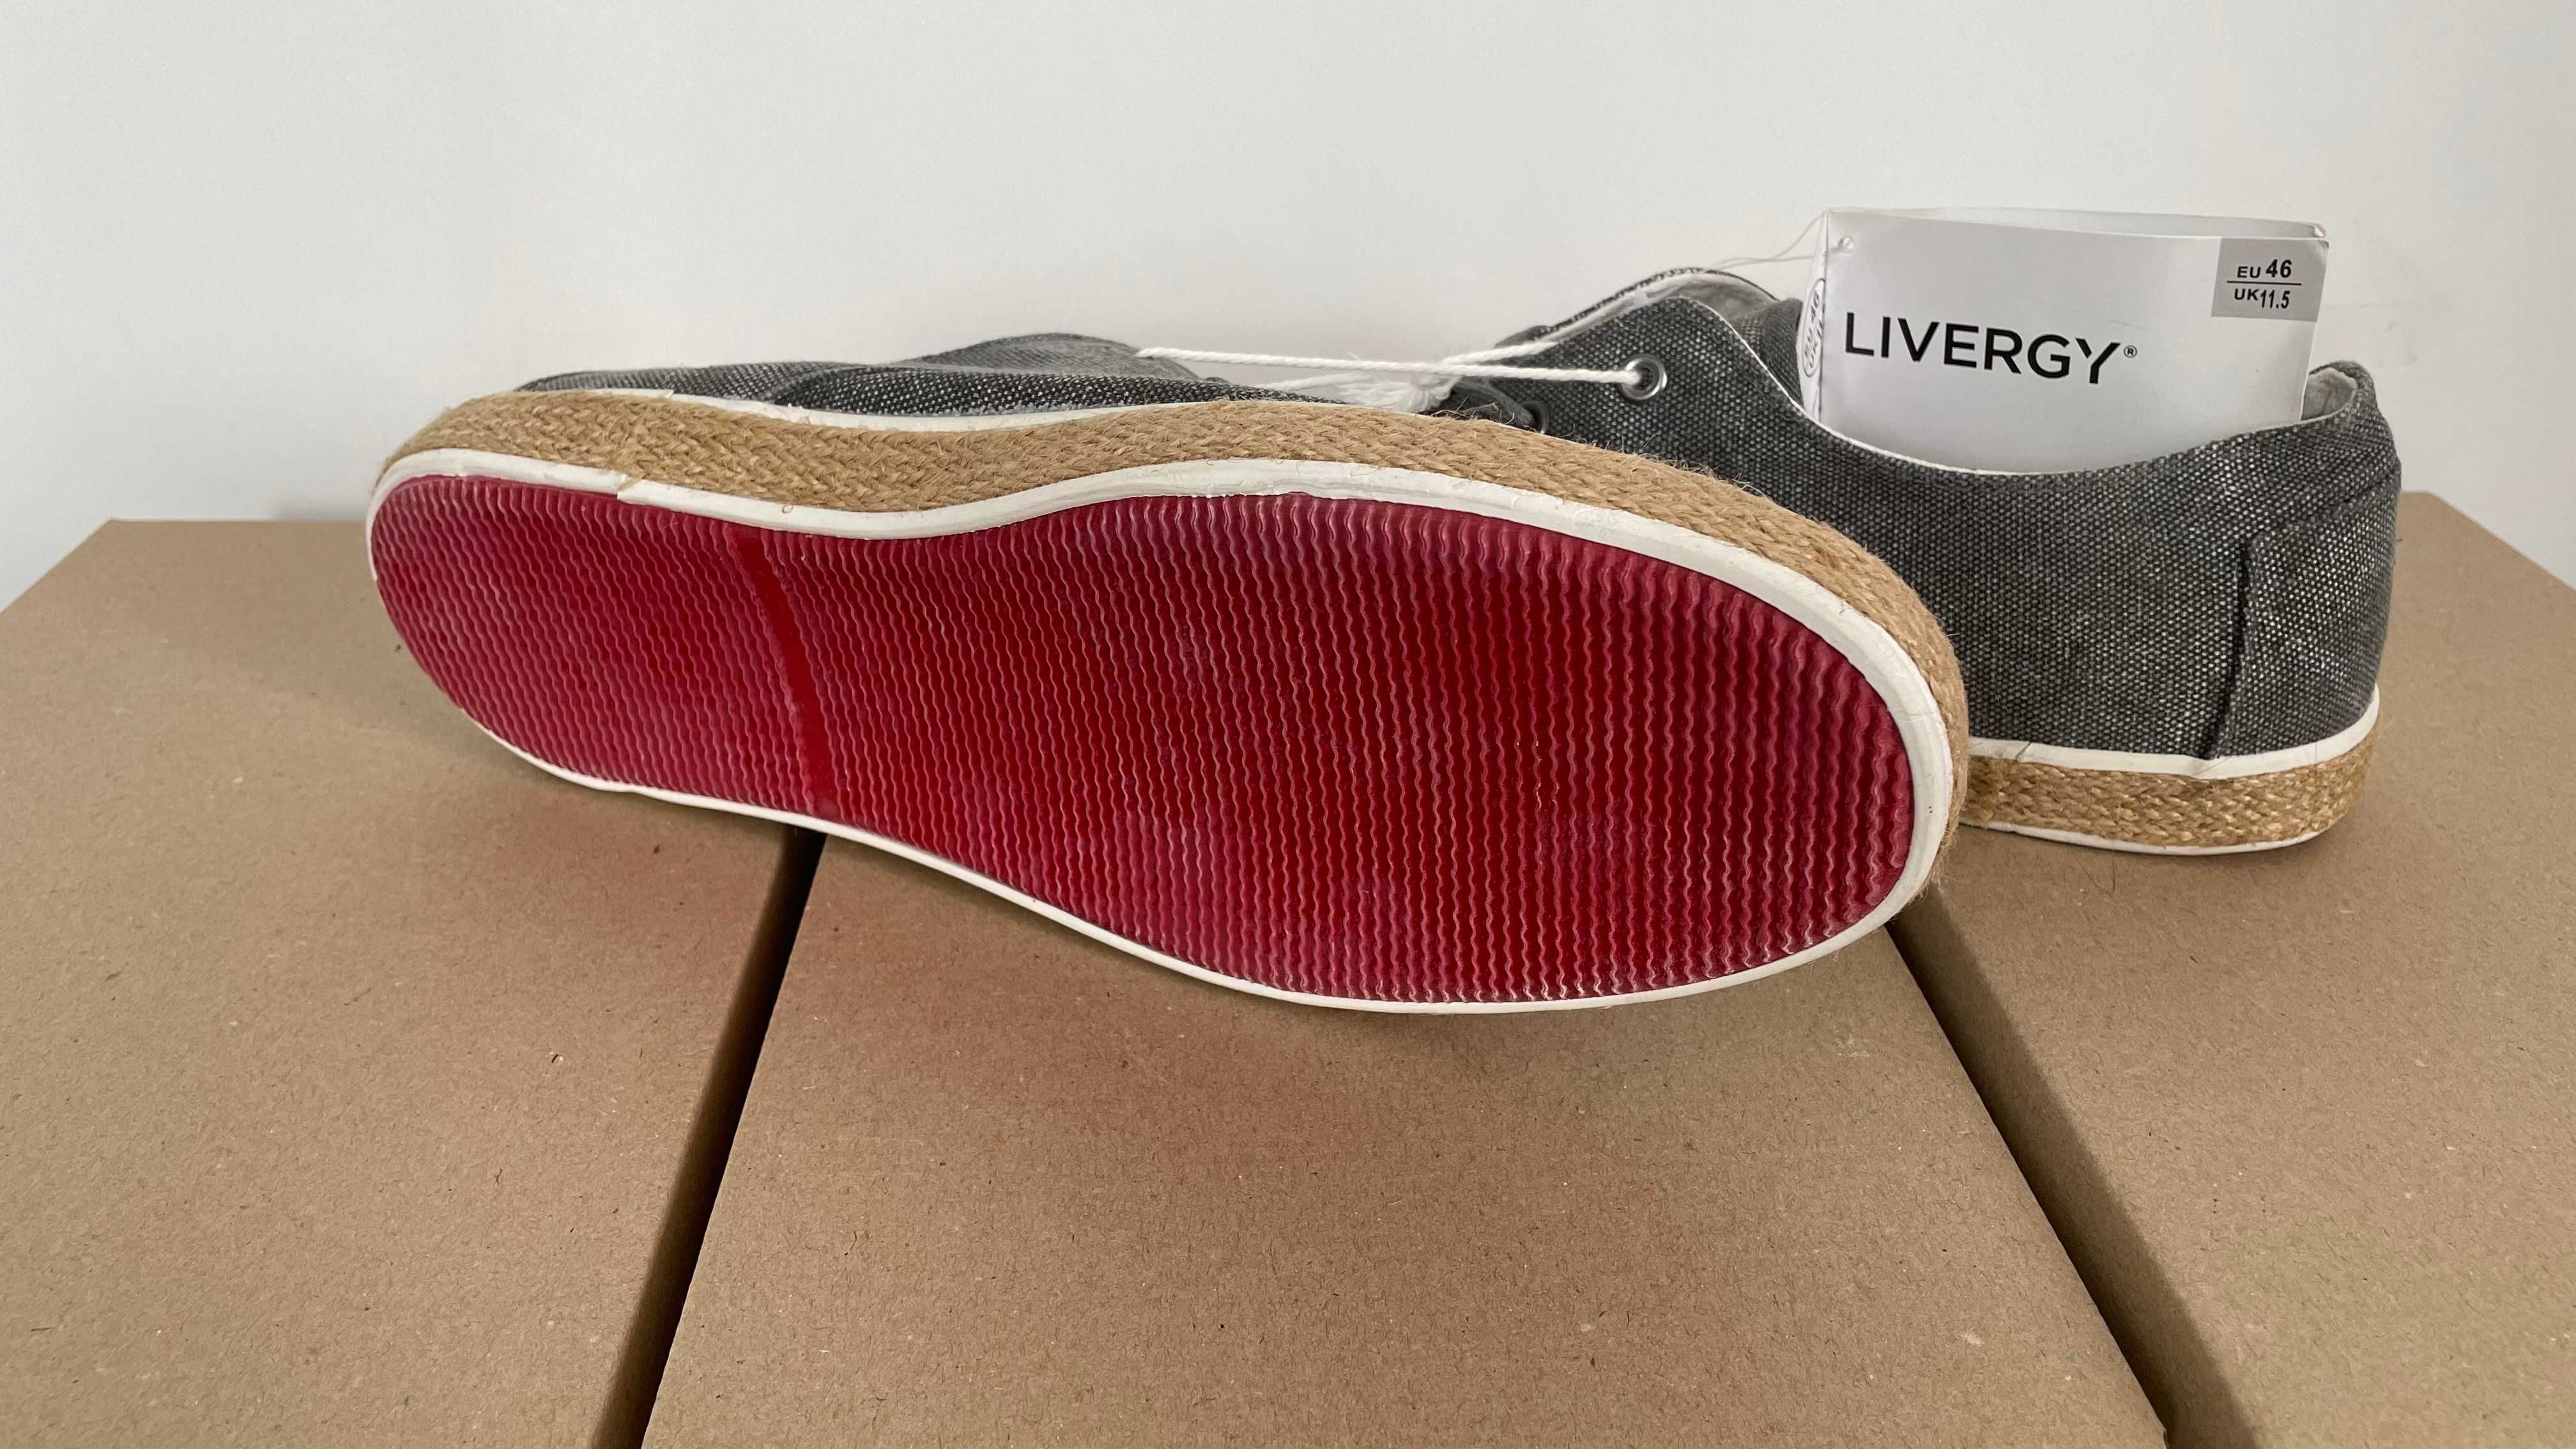 Livergy canvas shoes текстиль сірі 46 розмір